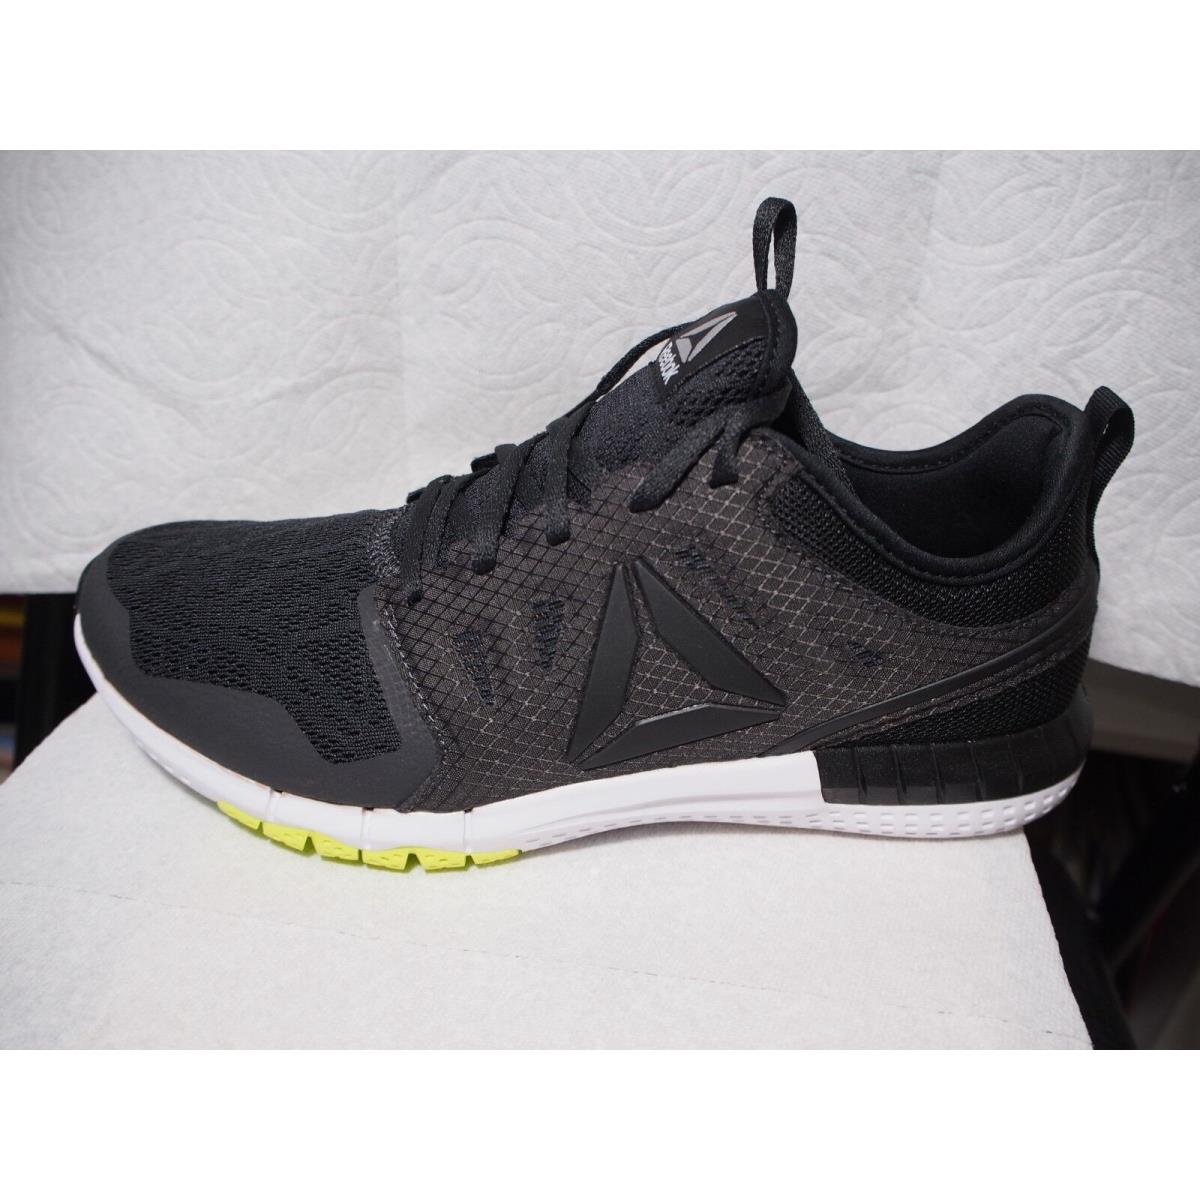 Reebok shoes Zprint - Black , Coal/Black/Alloy/Solar Yellow/Silver Metallic Manufacturer 1